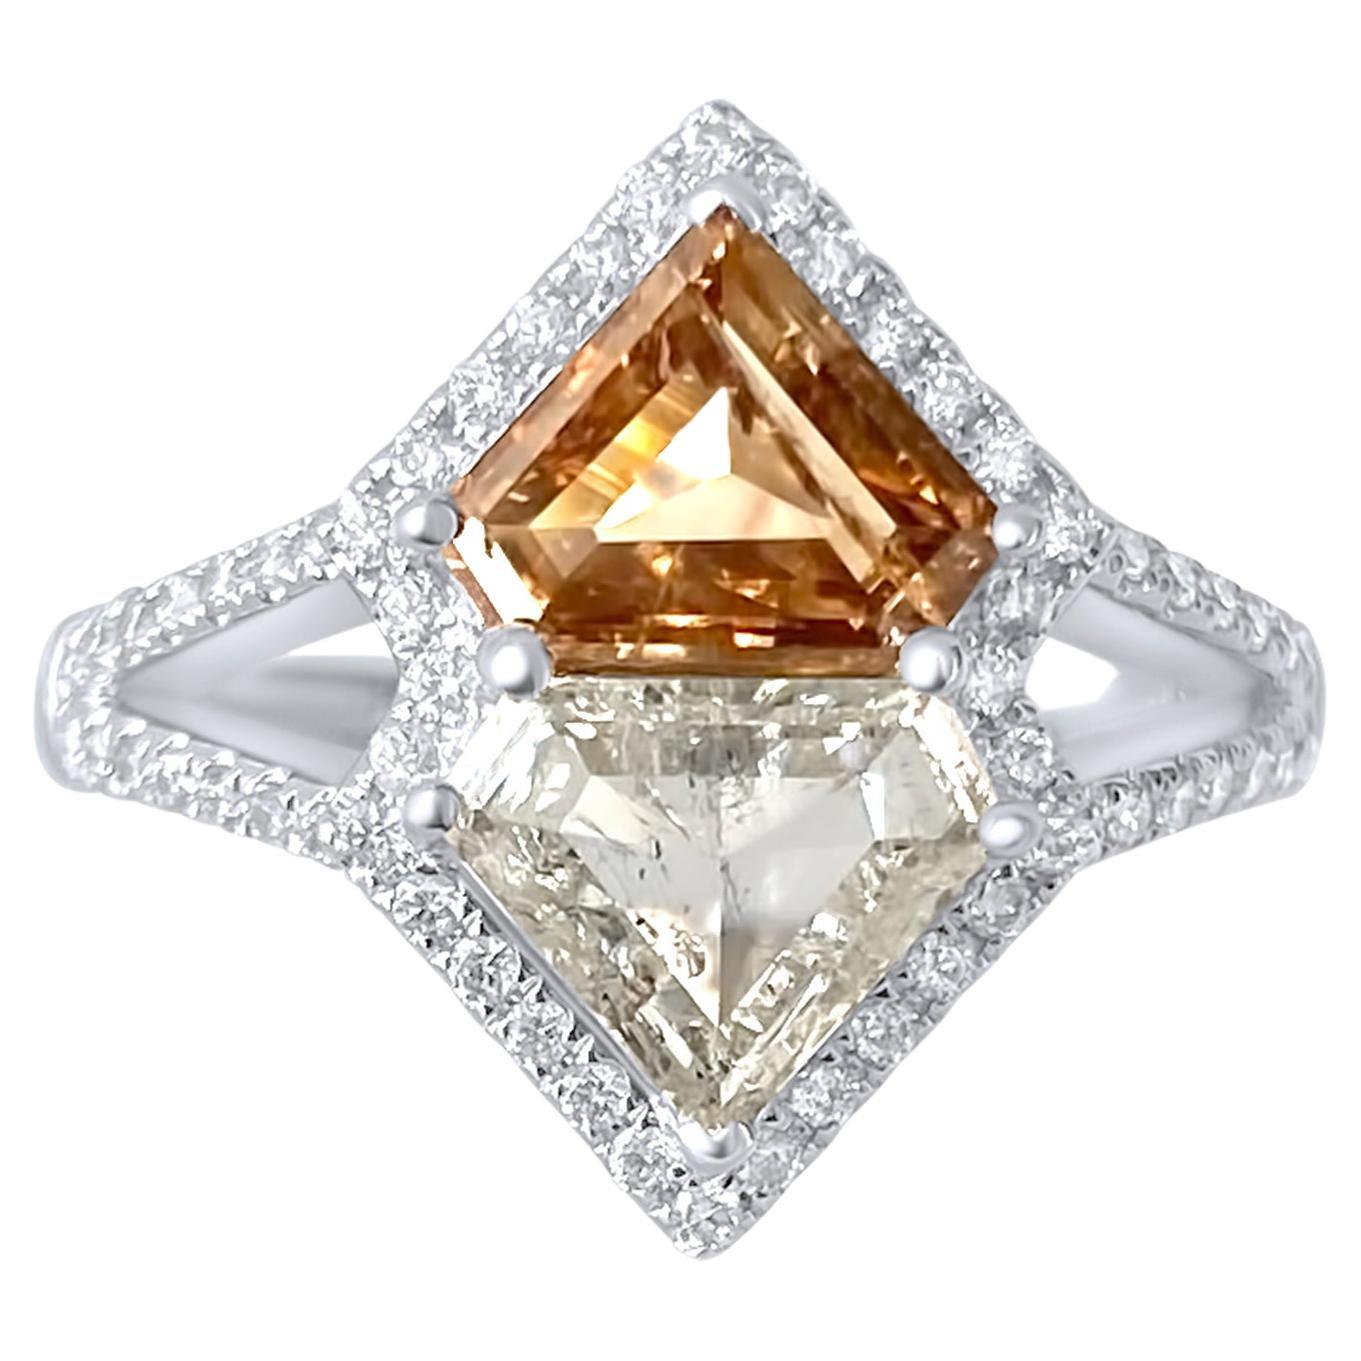 Featuring two stunning shield cut diamonds, including one fancy cognac diamond, on a split shank diamond band

Ring size 6.5